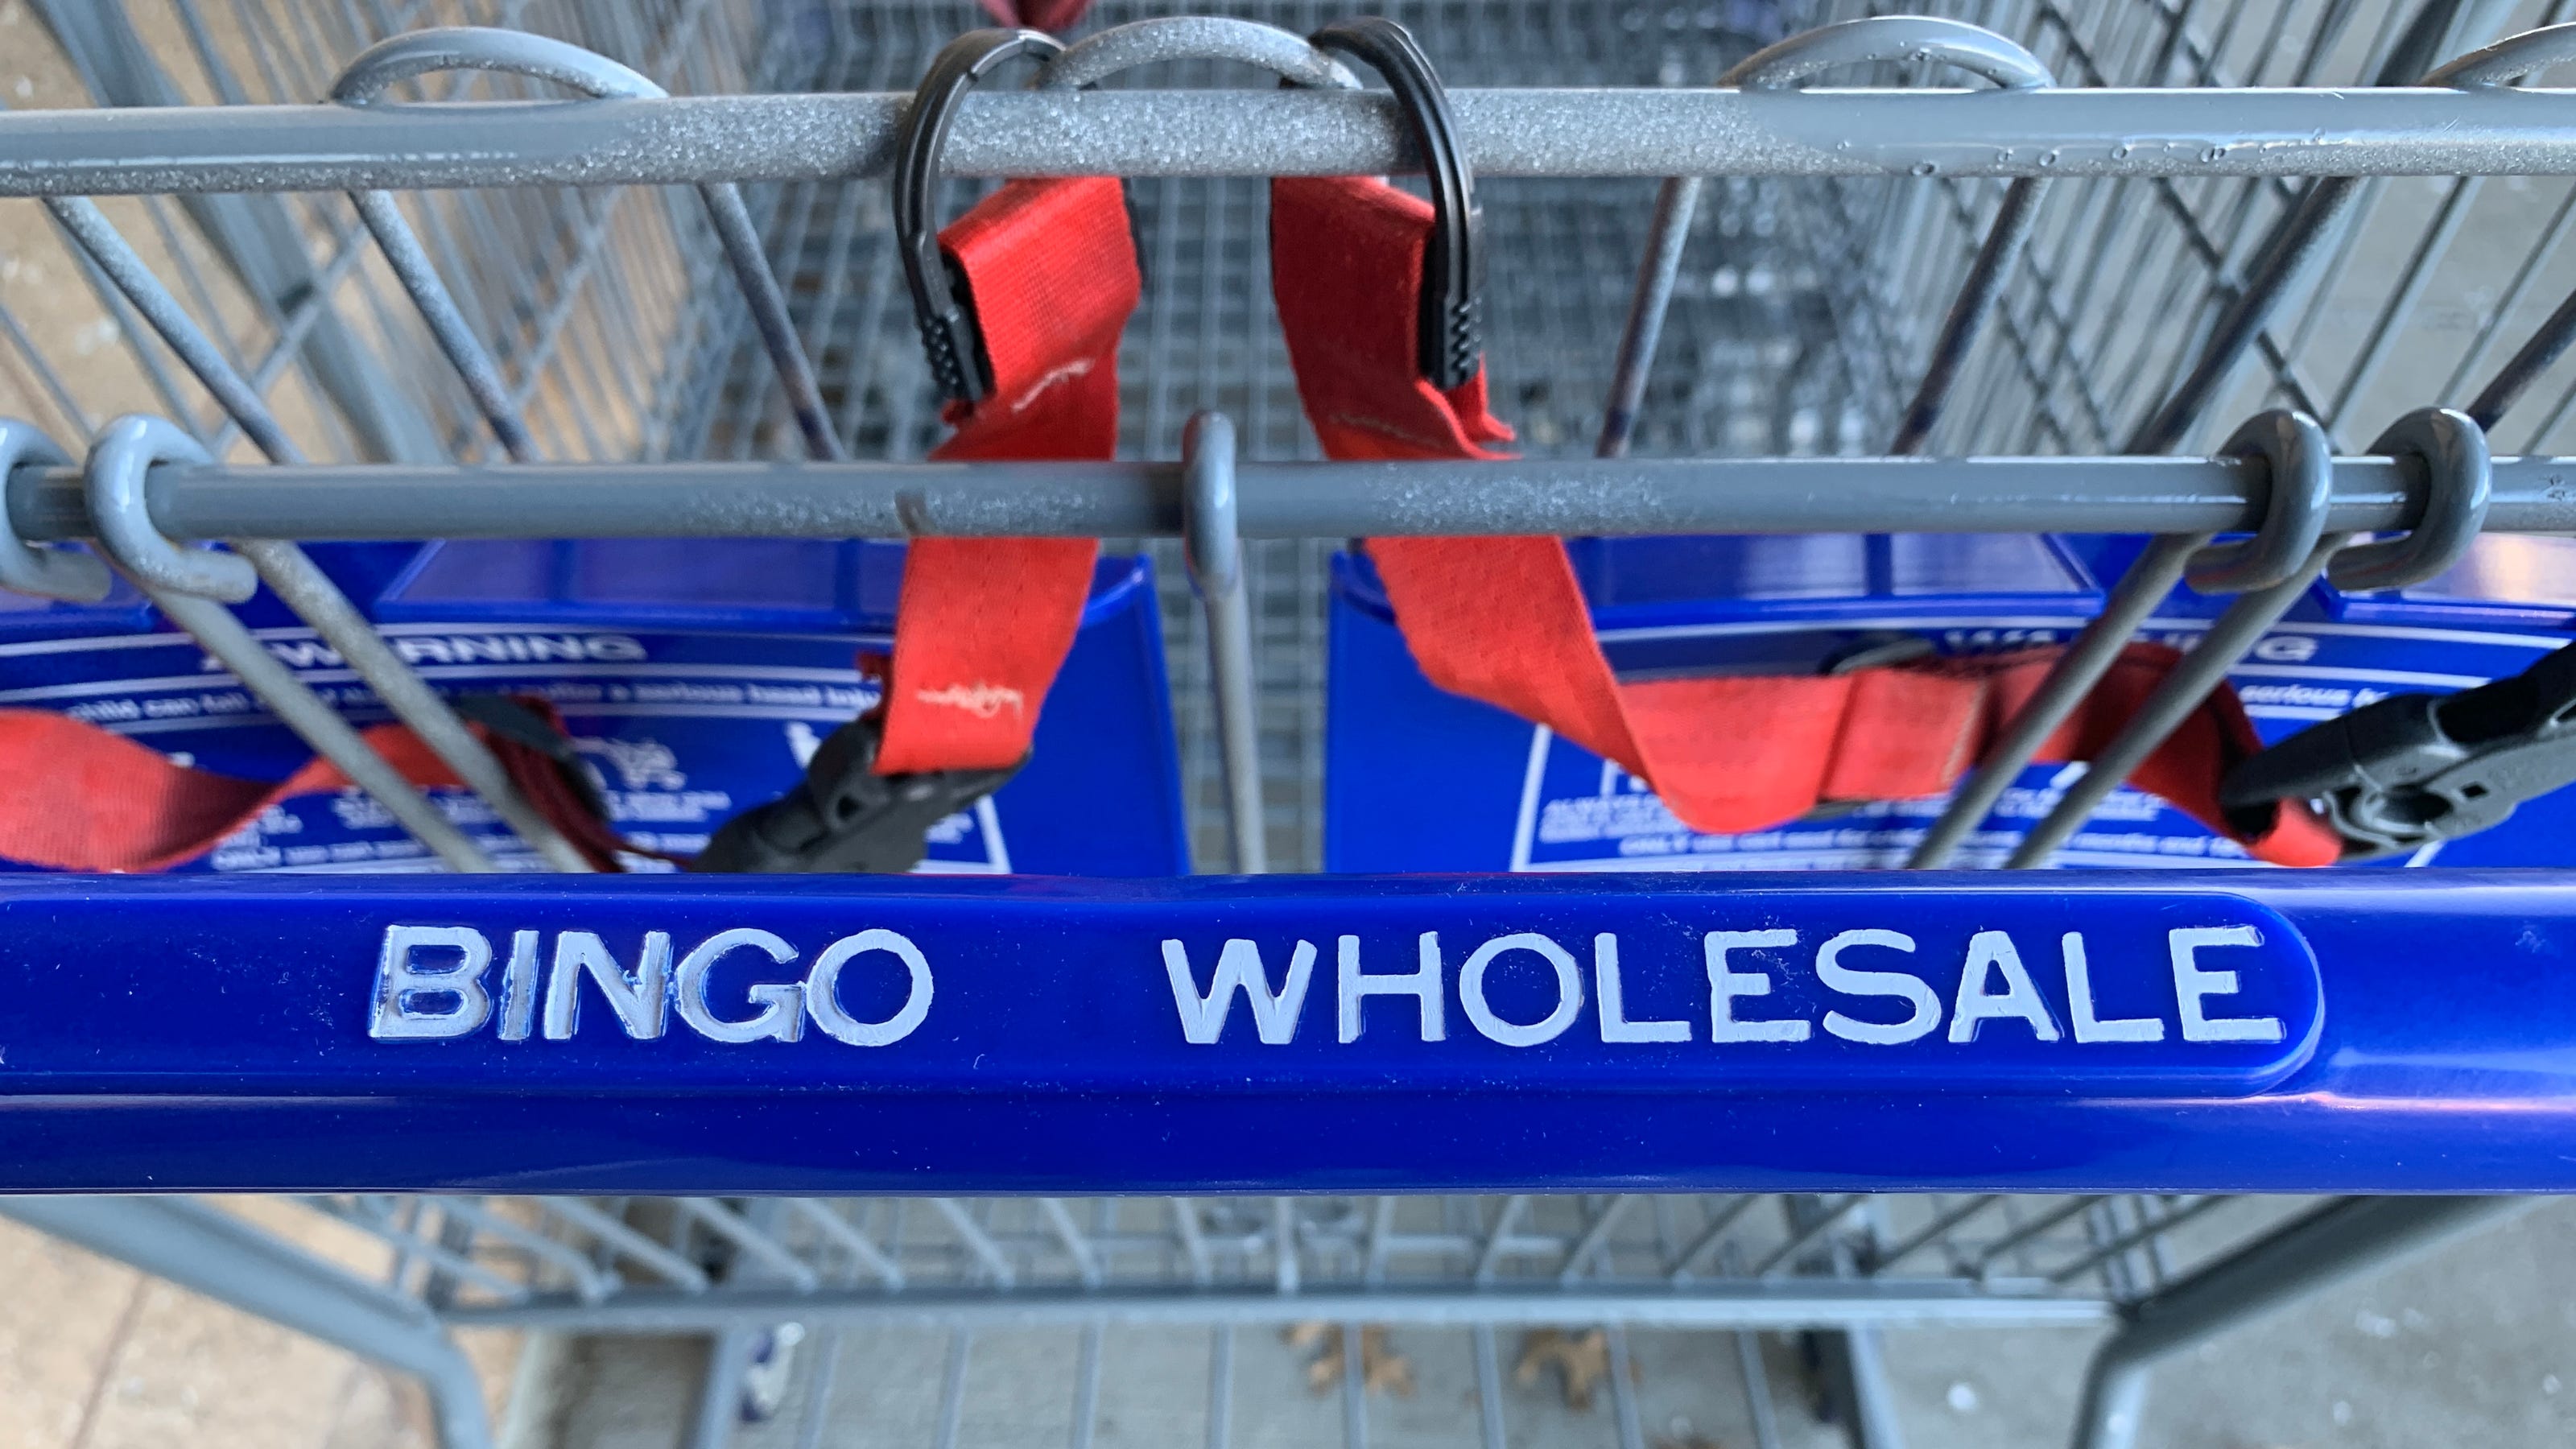 Bingo Wholesale Store Opens In Lakewood New Jersey